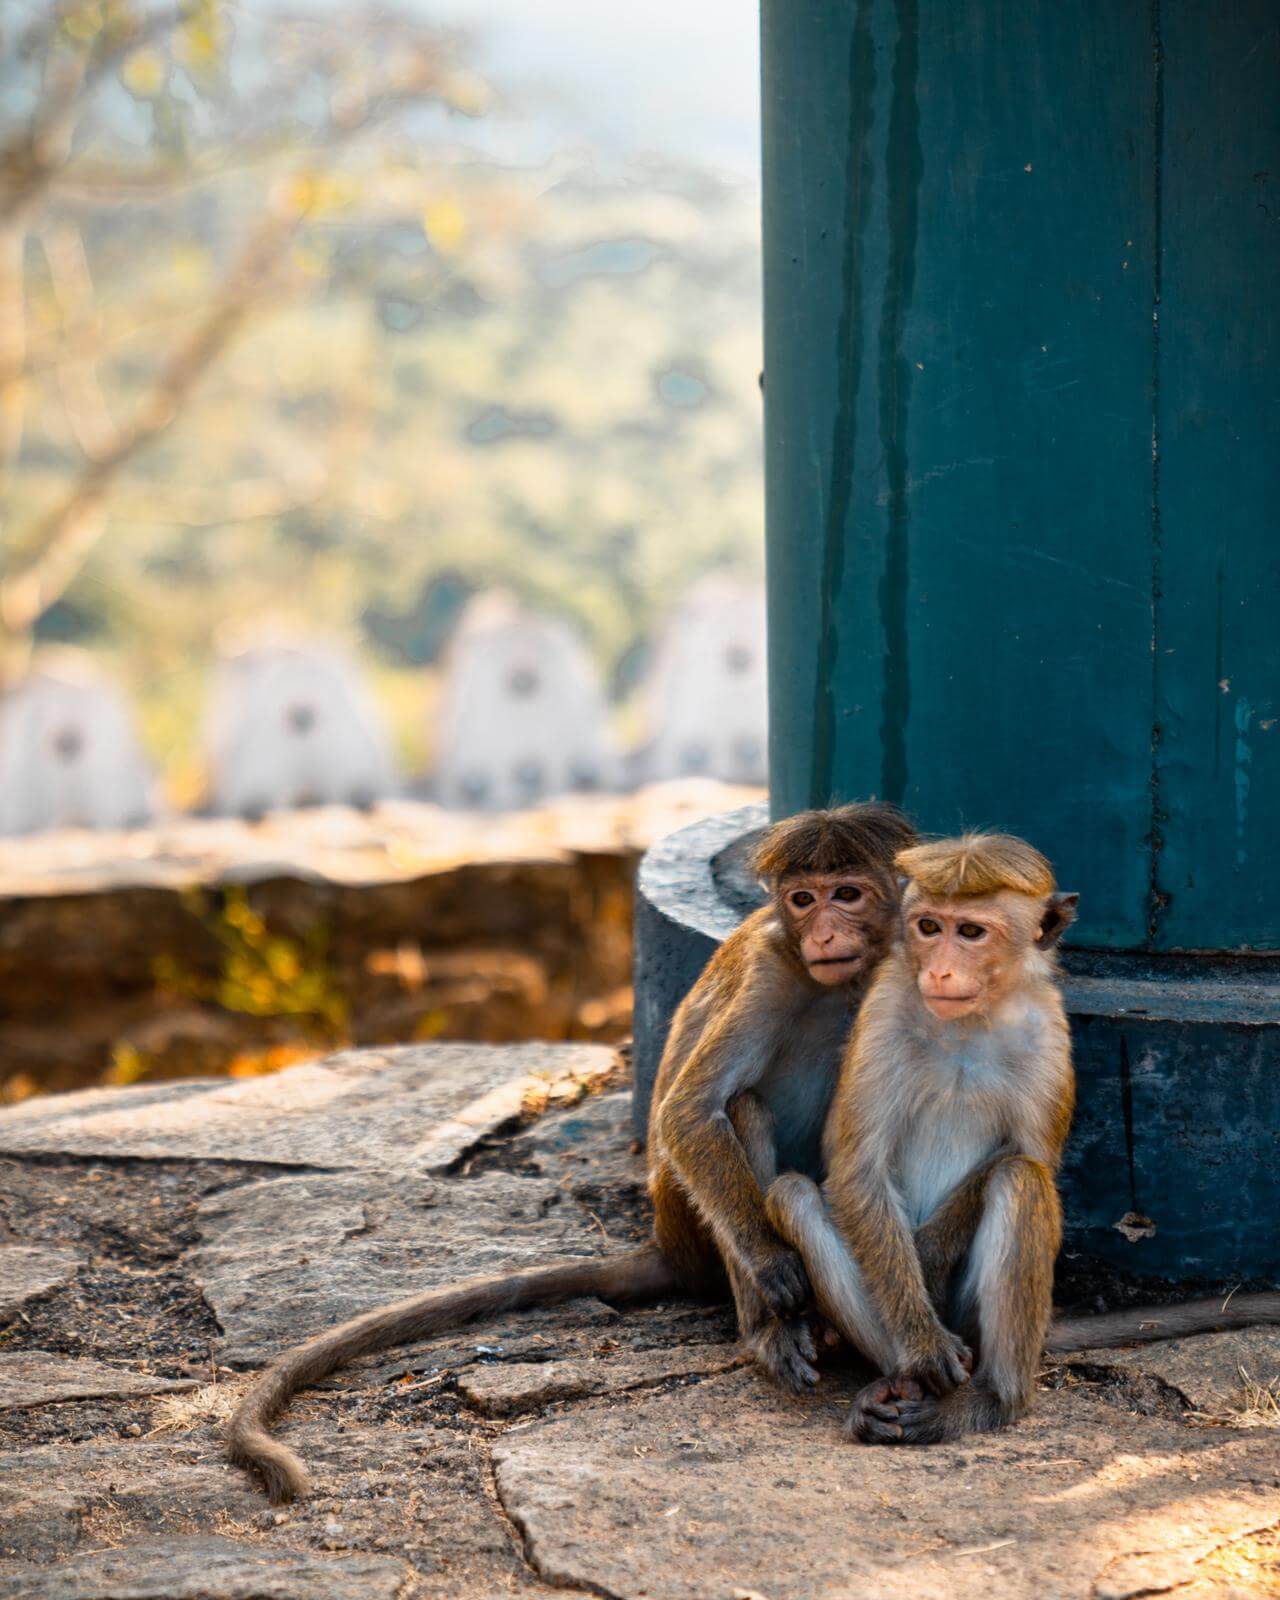 Monkeys in Sri Lanka